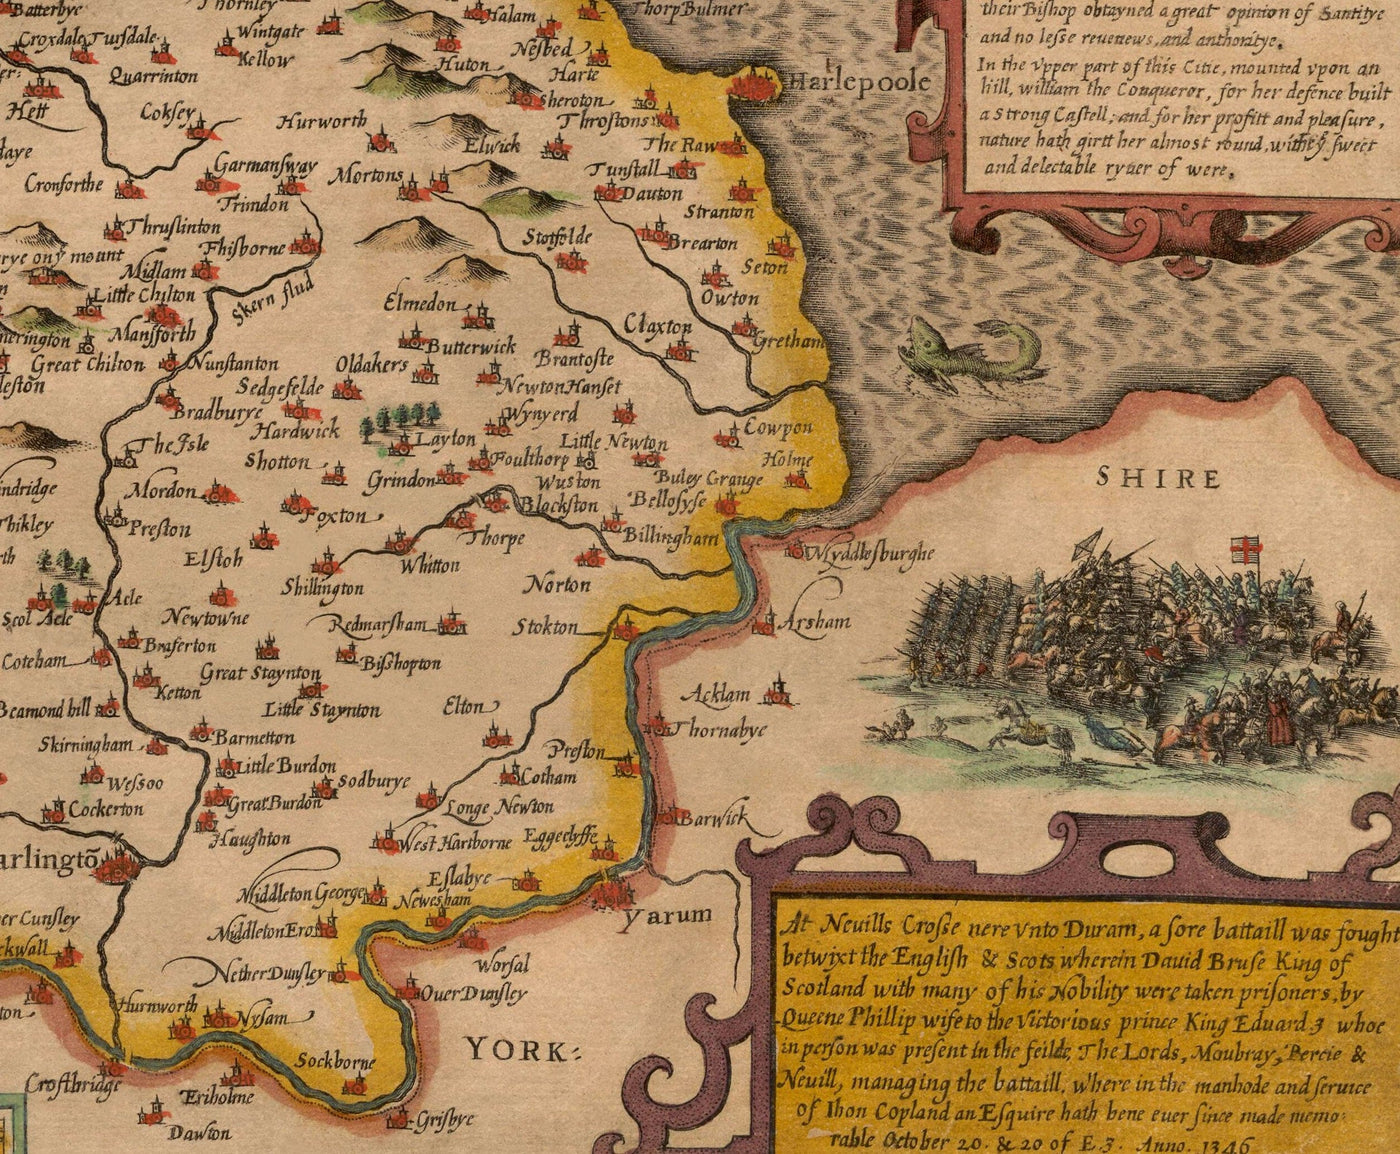 Old Map of County Durham, 1611 by John Speed - Darlington, Stockton-on-Tees, Sunderland